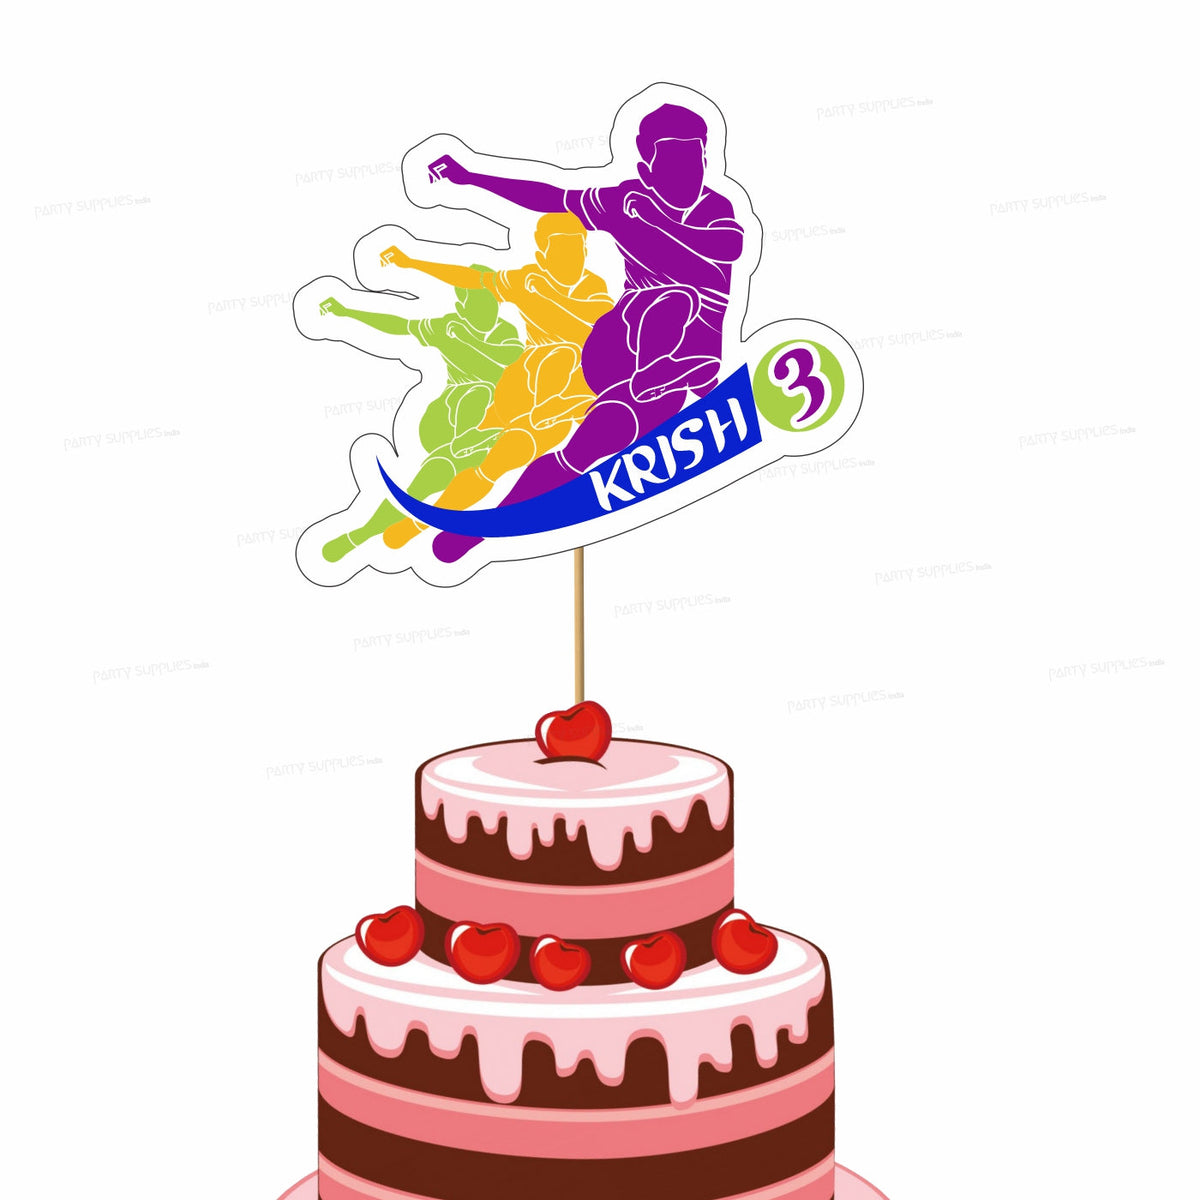 PSI Football Theme Customized Cake Topper